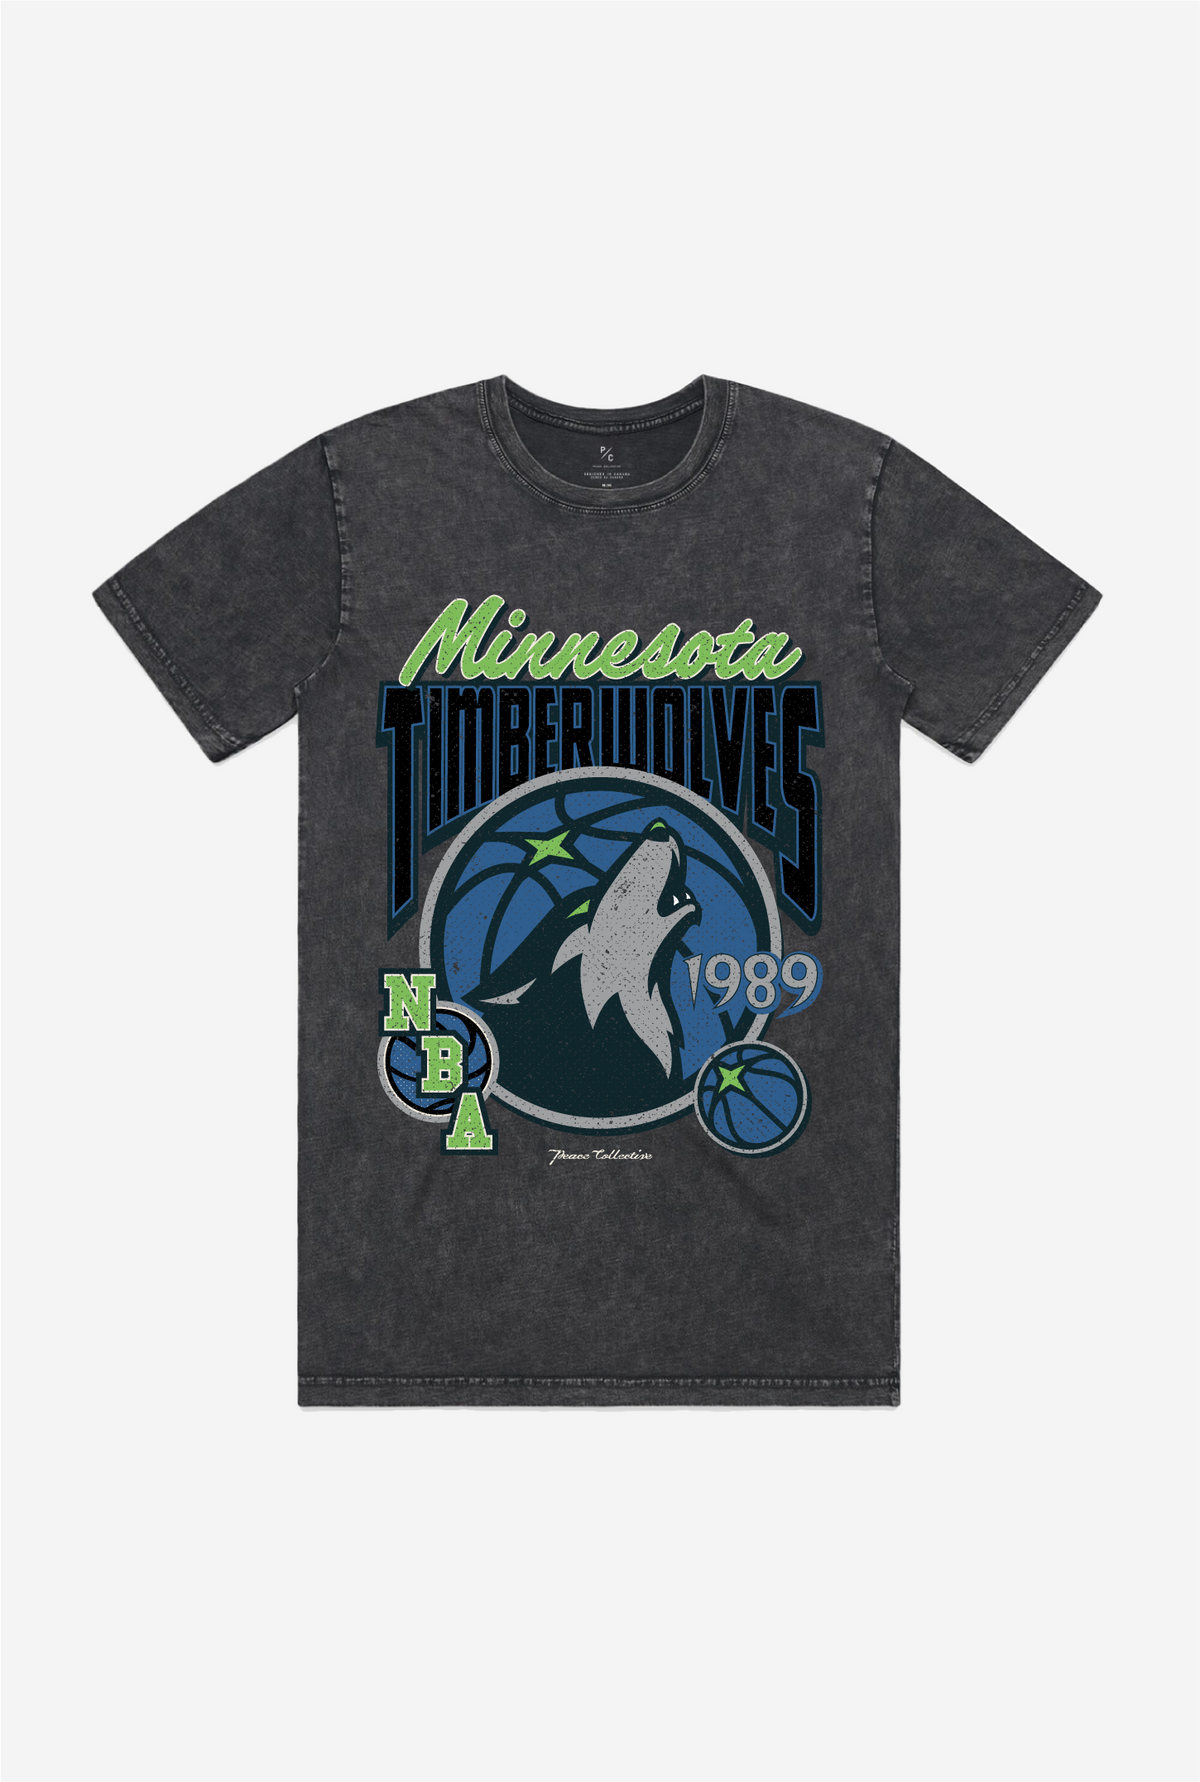 Minnesota Timberwolves Stonewash T-Shirt - Black